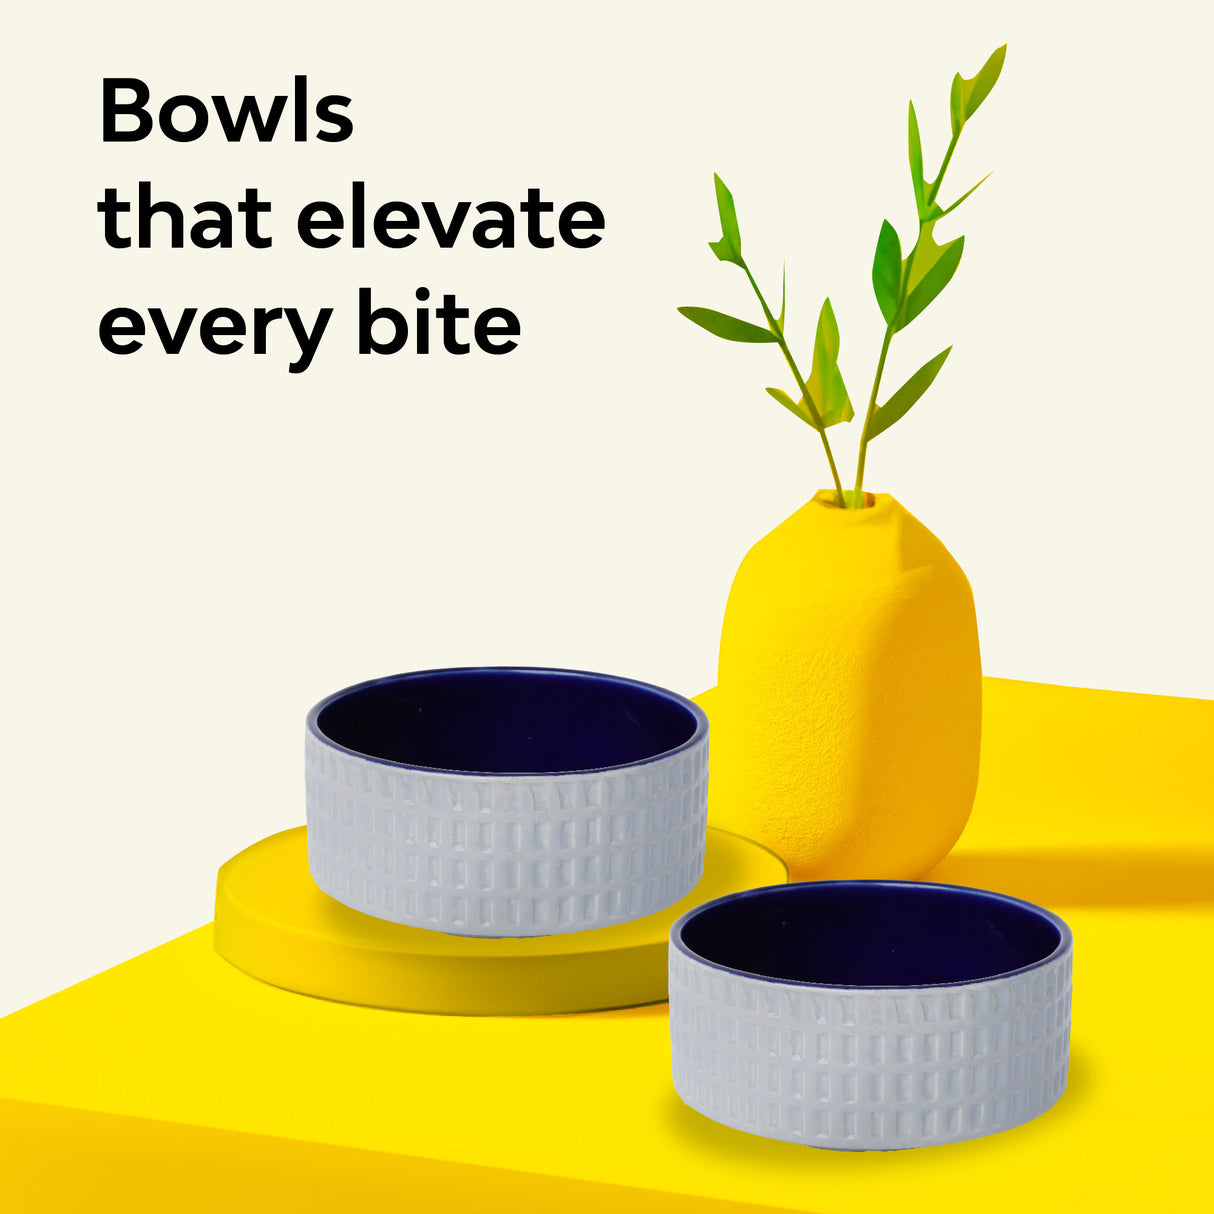 Textured Ceramic Serving Bowl | Set of 2